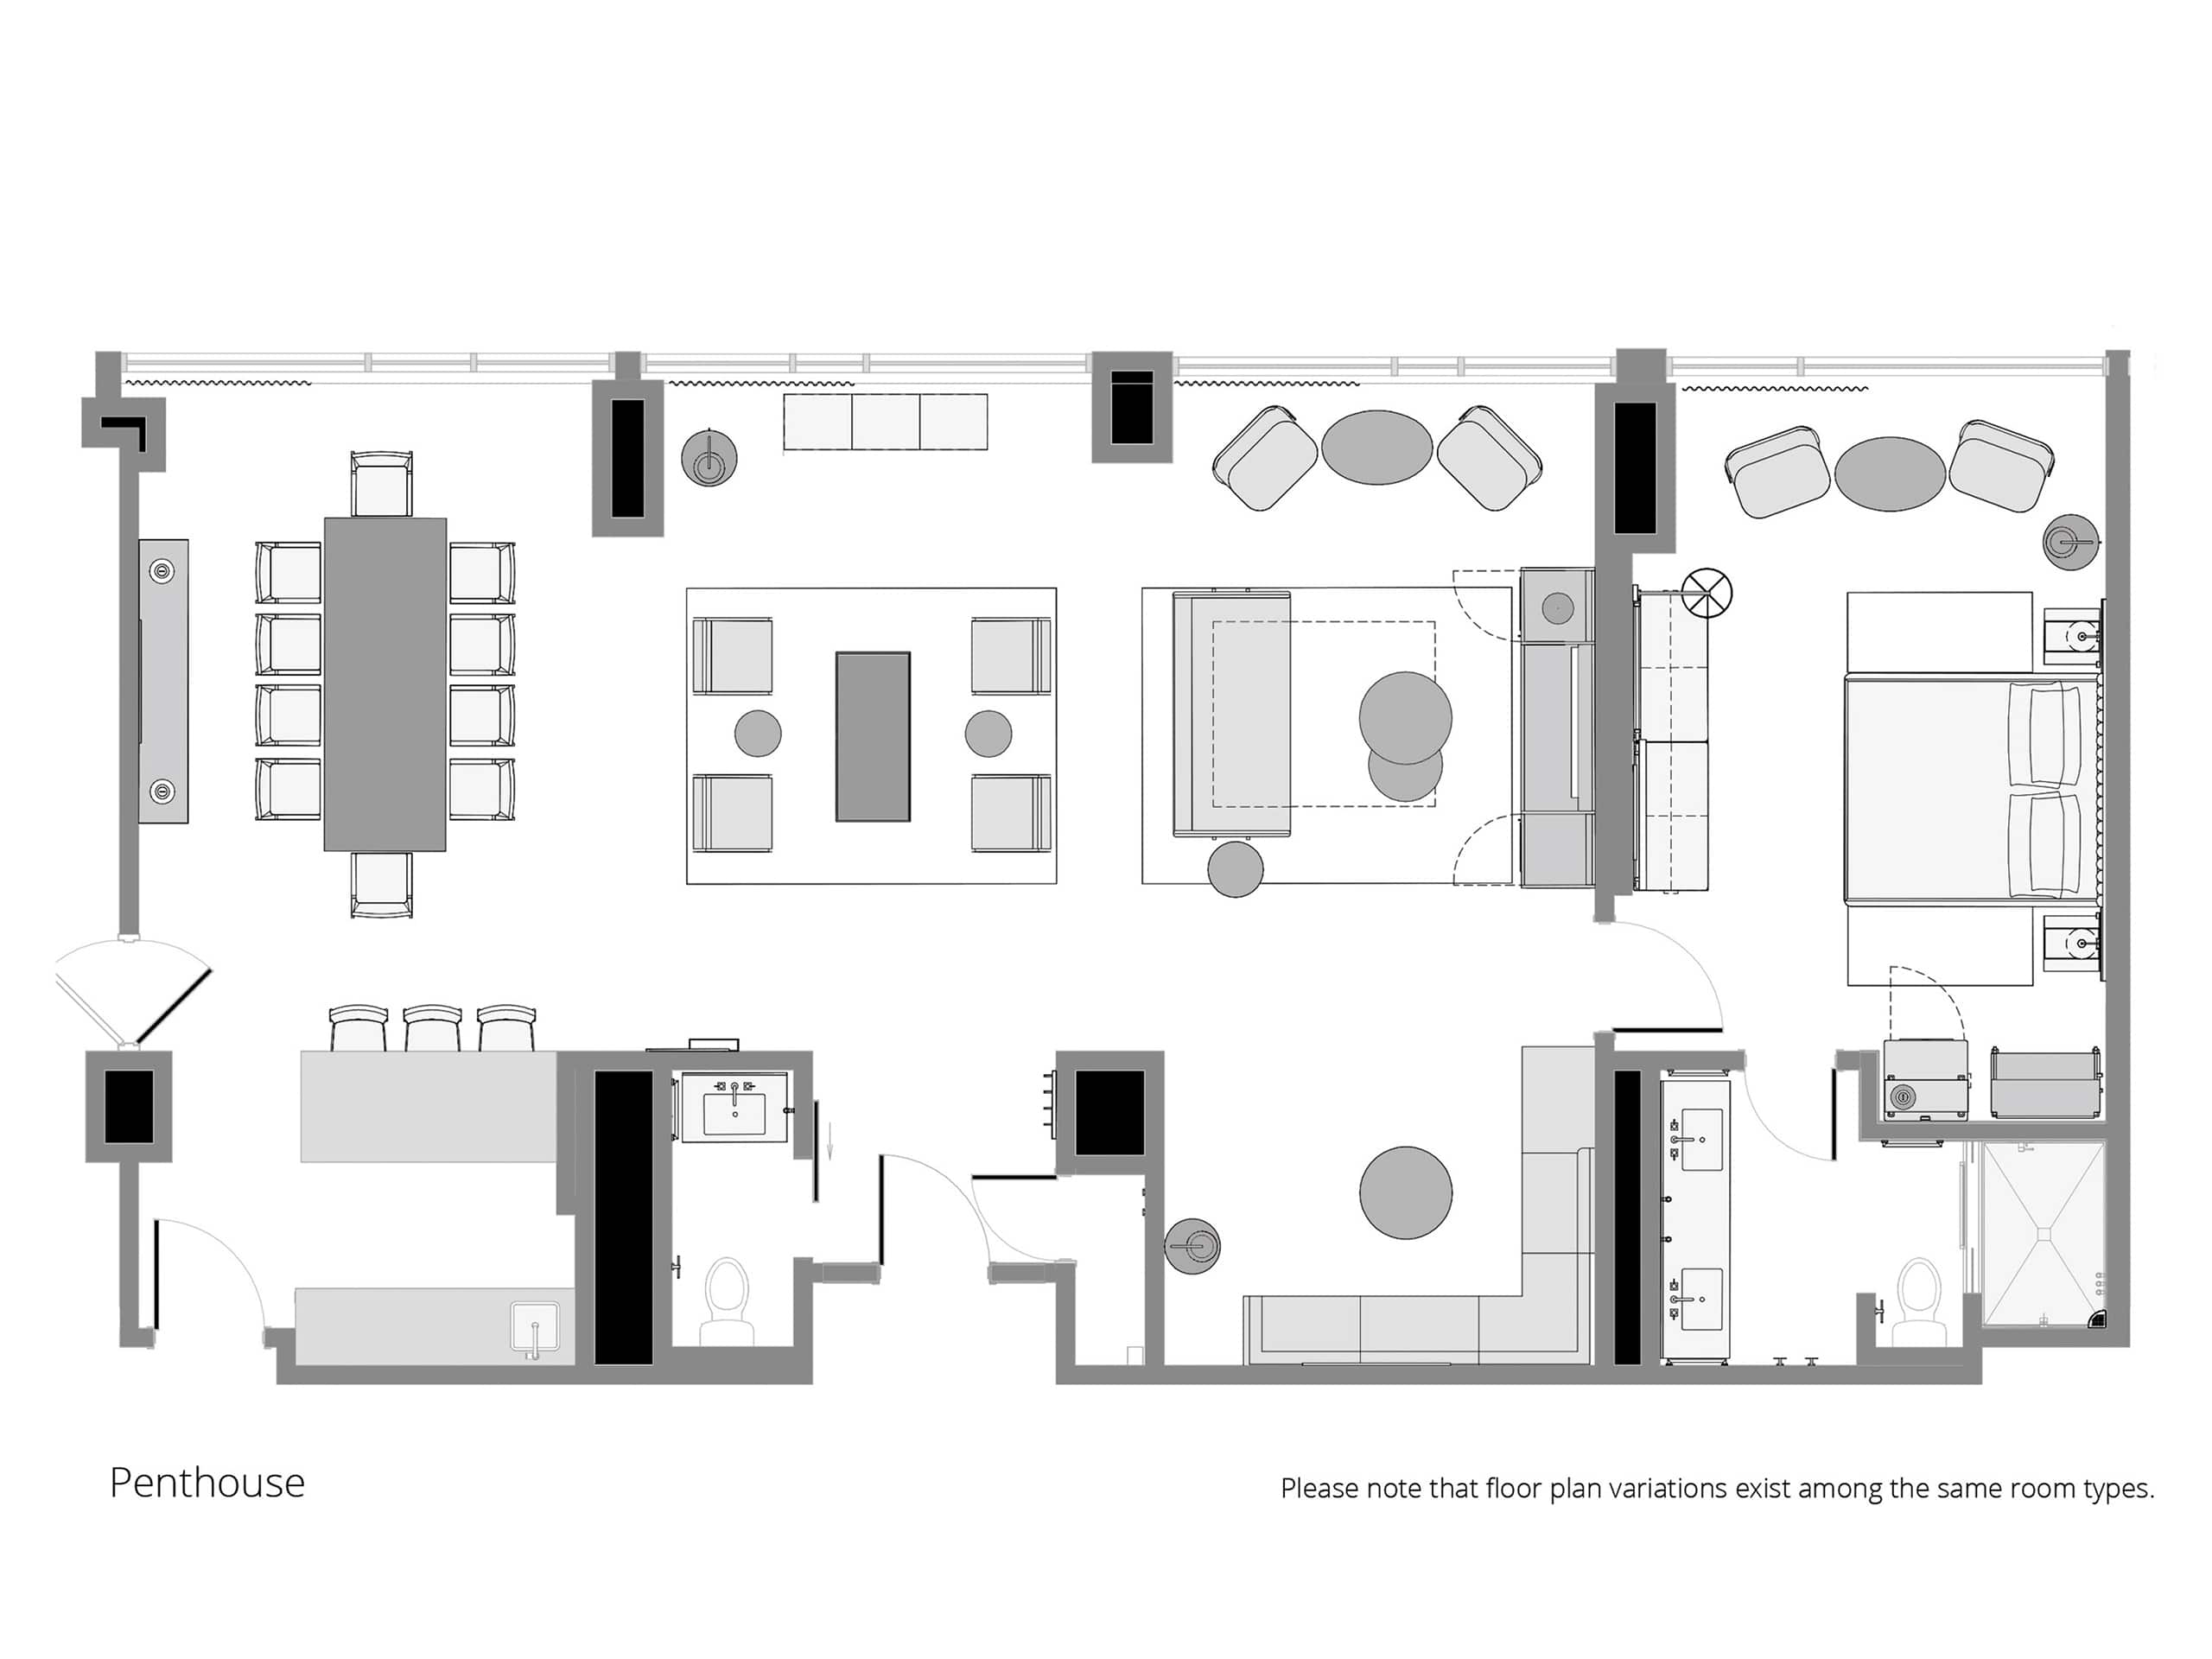 Hyatt Regency Irvine Penthouse Floorplan